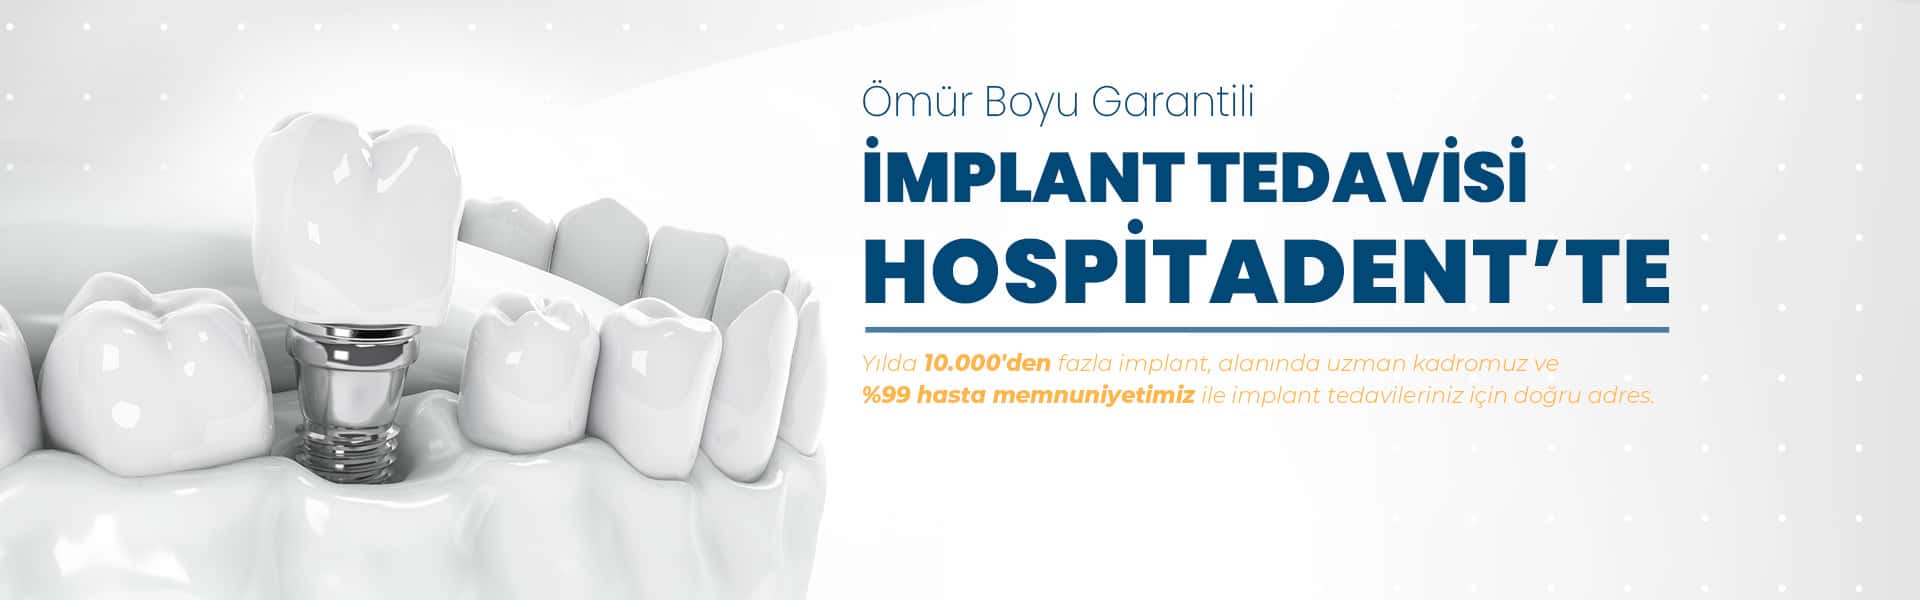 implant1 920x600 tr yeni Anasayfa